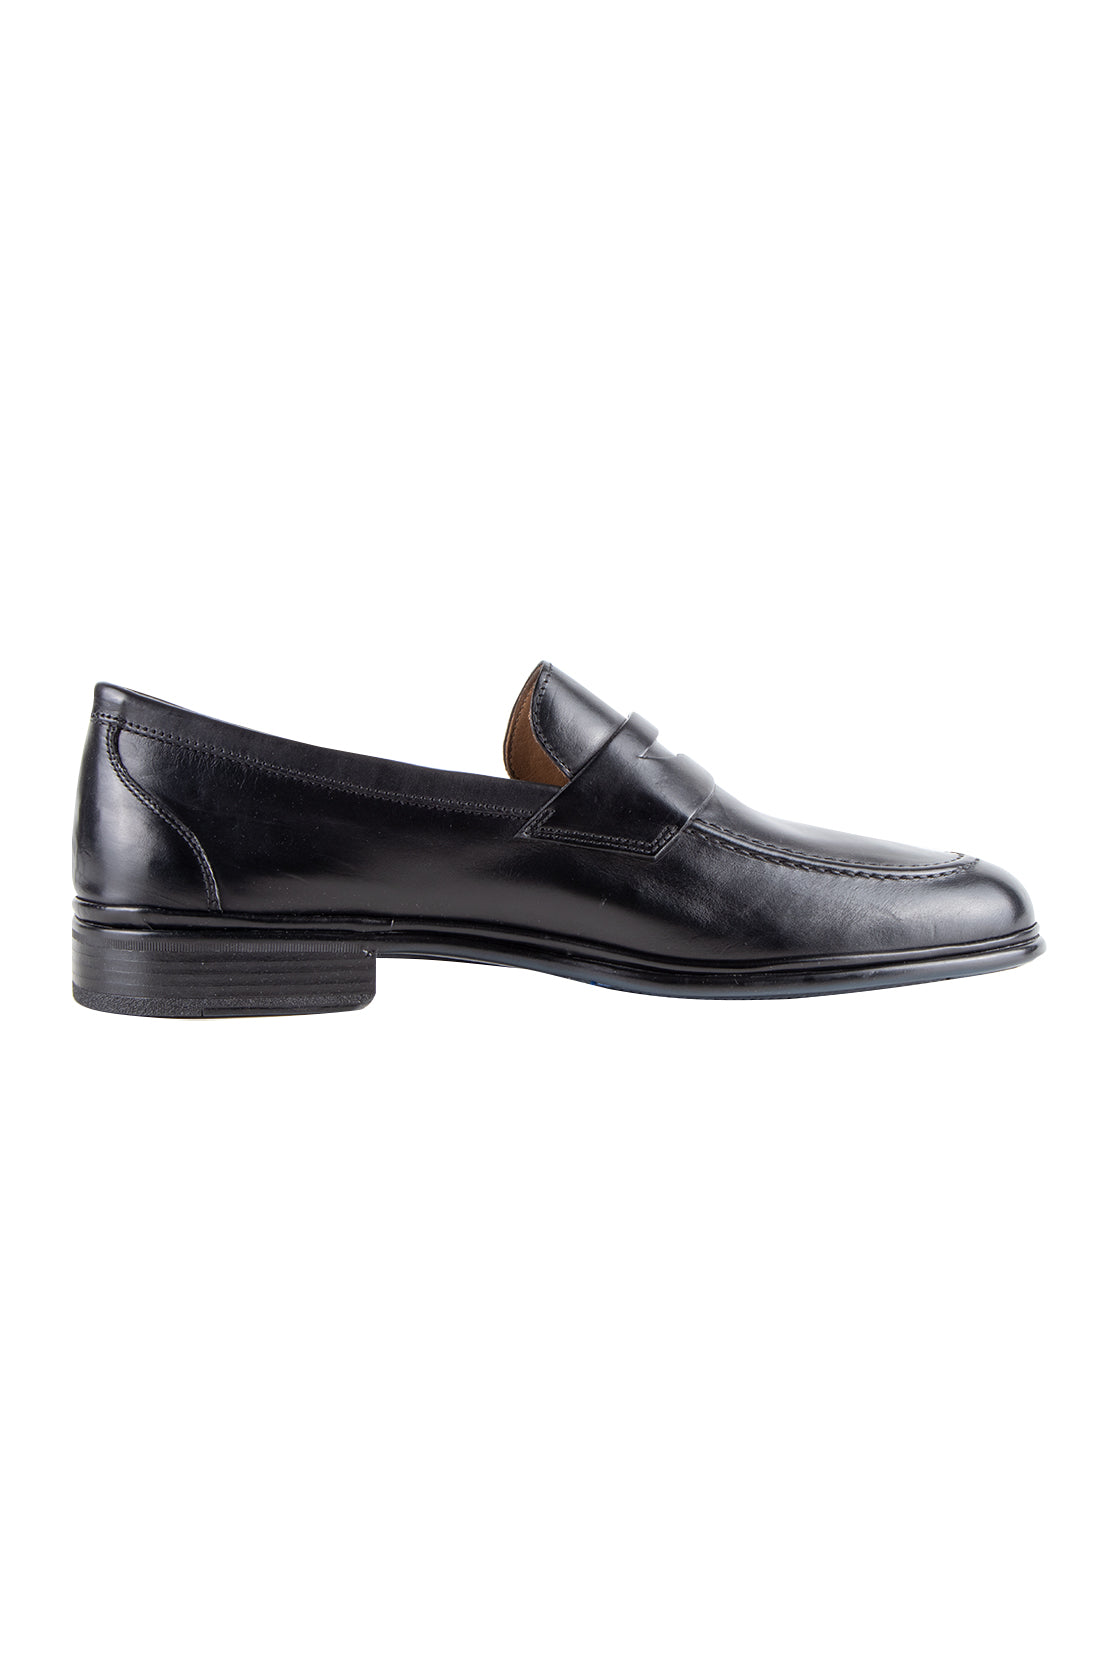 Galizio Torresi Slip On Shoe Black